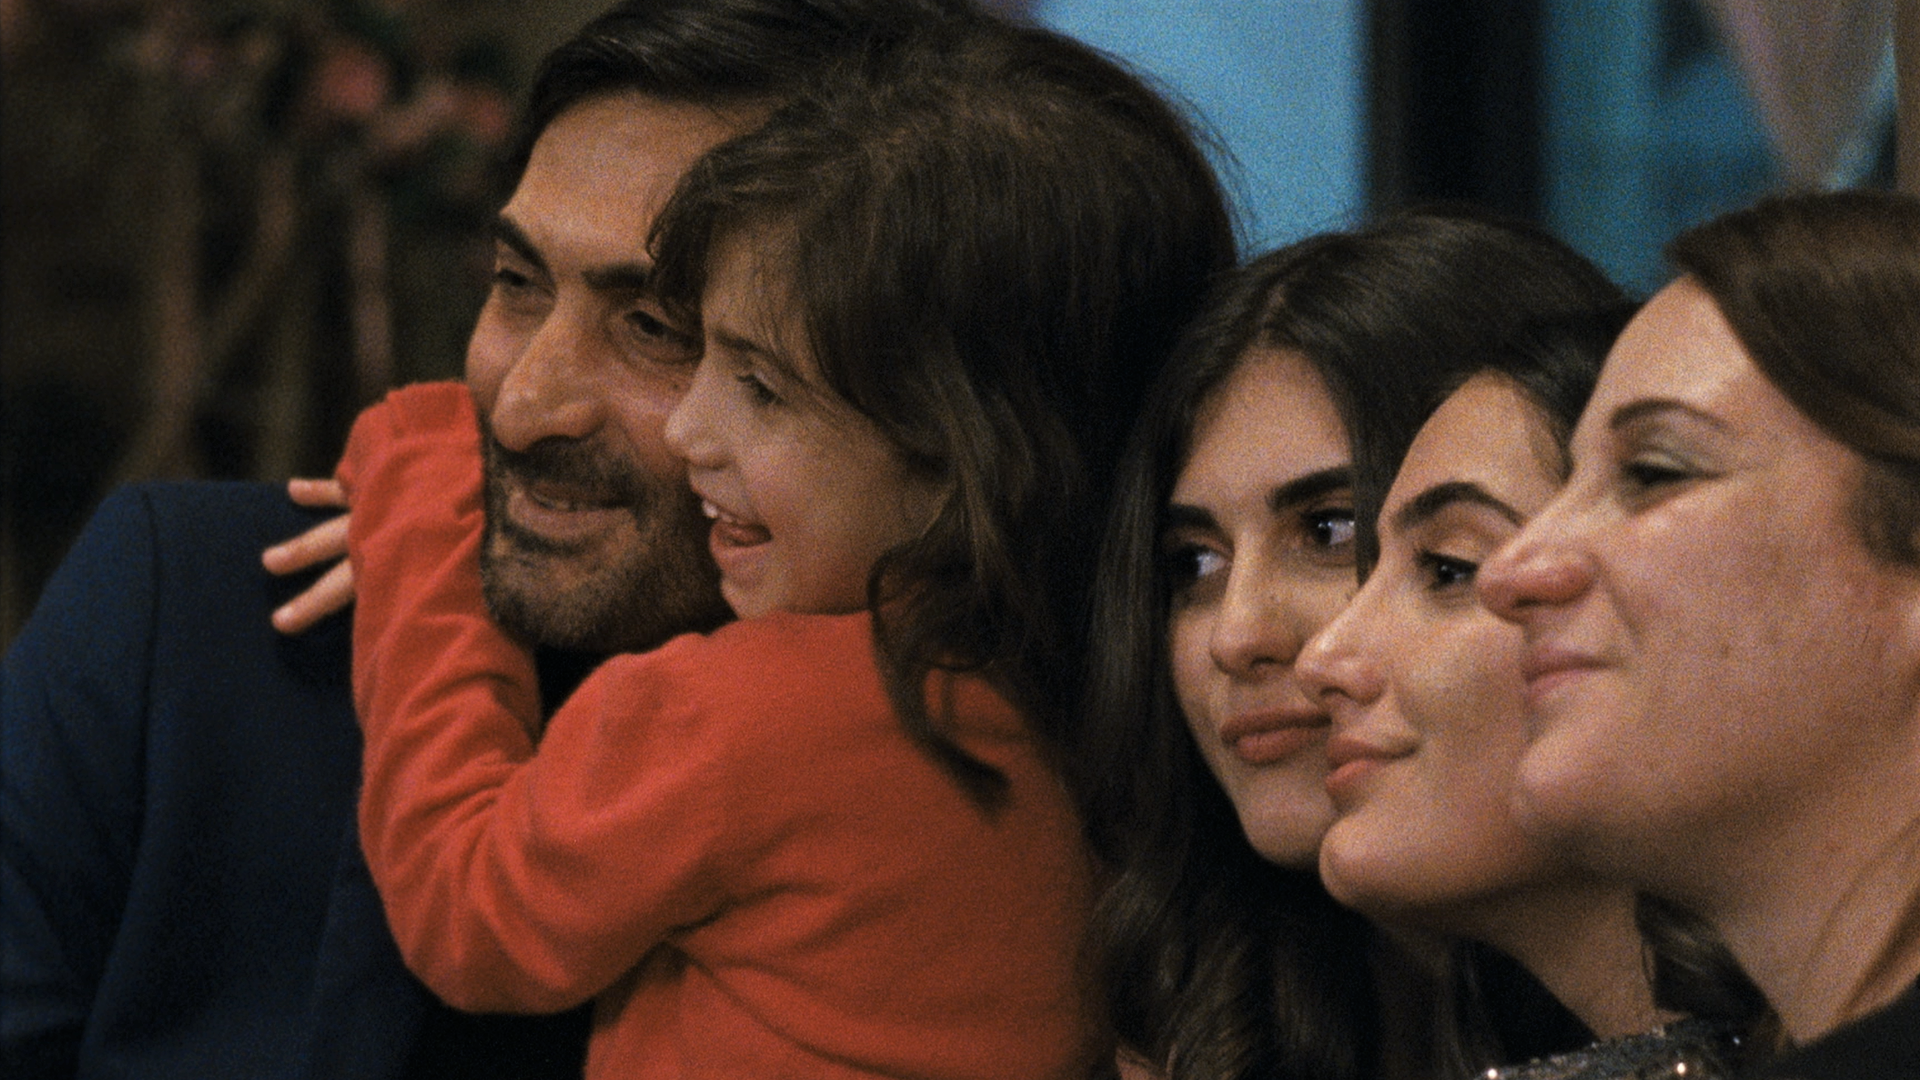 The cast of the Italian film A Chiara (To Chiara), screening at the 2021 Italian Film Festival In Australia